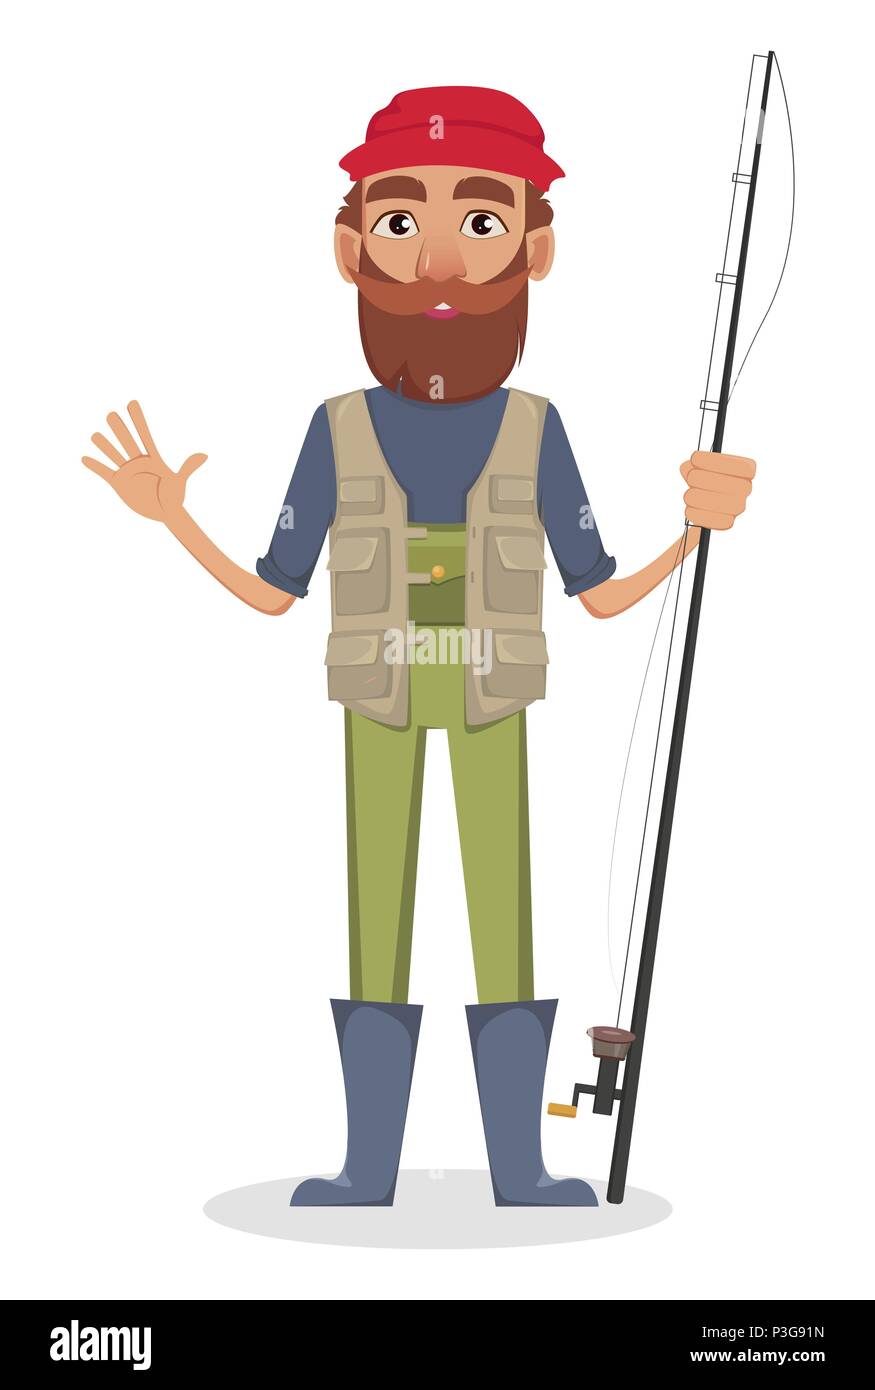 Fisher cartoon character. Fishermen holding fishing rod and waving